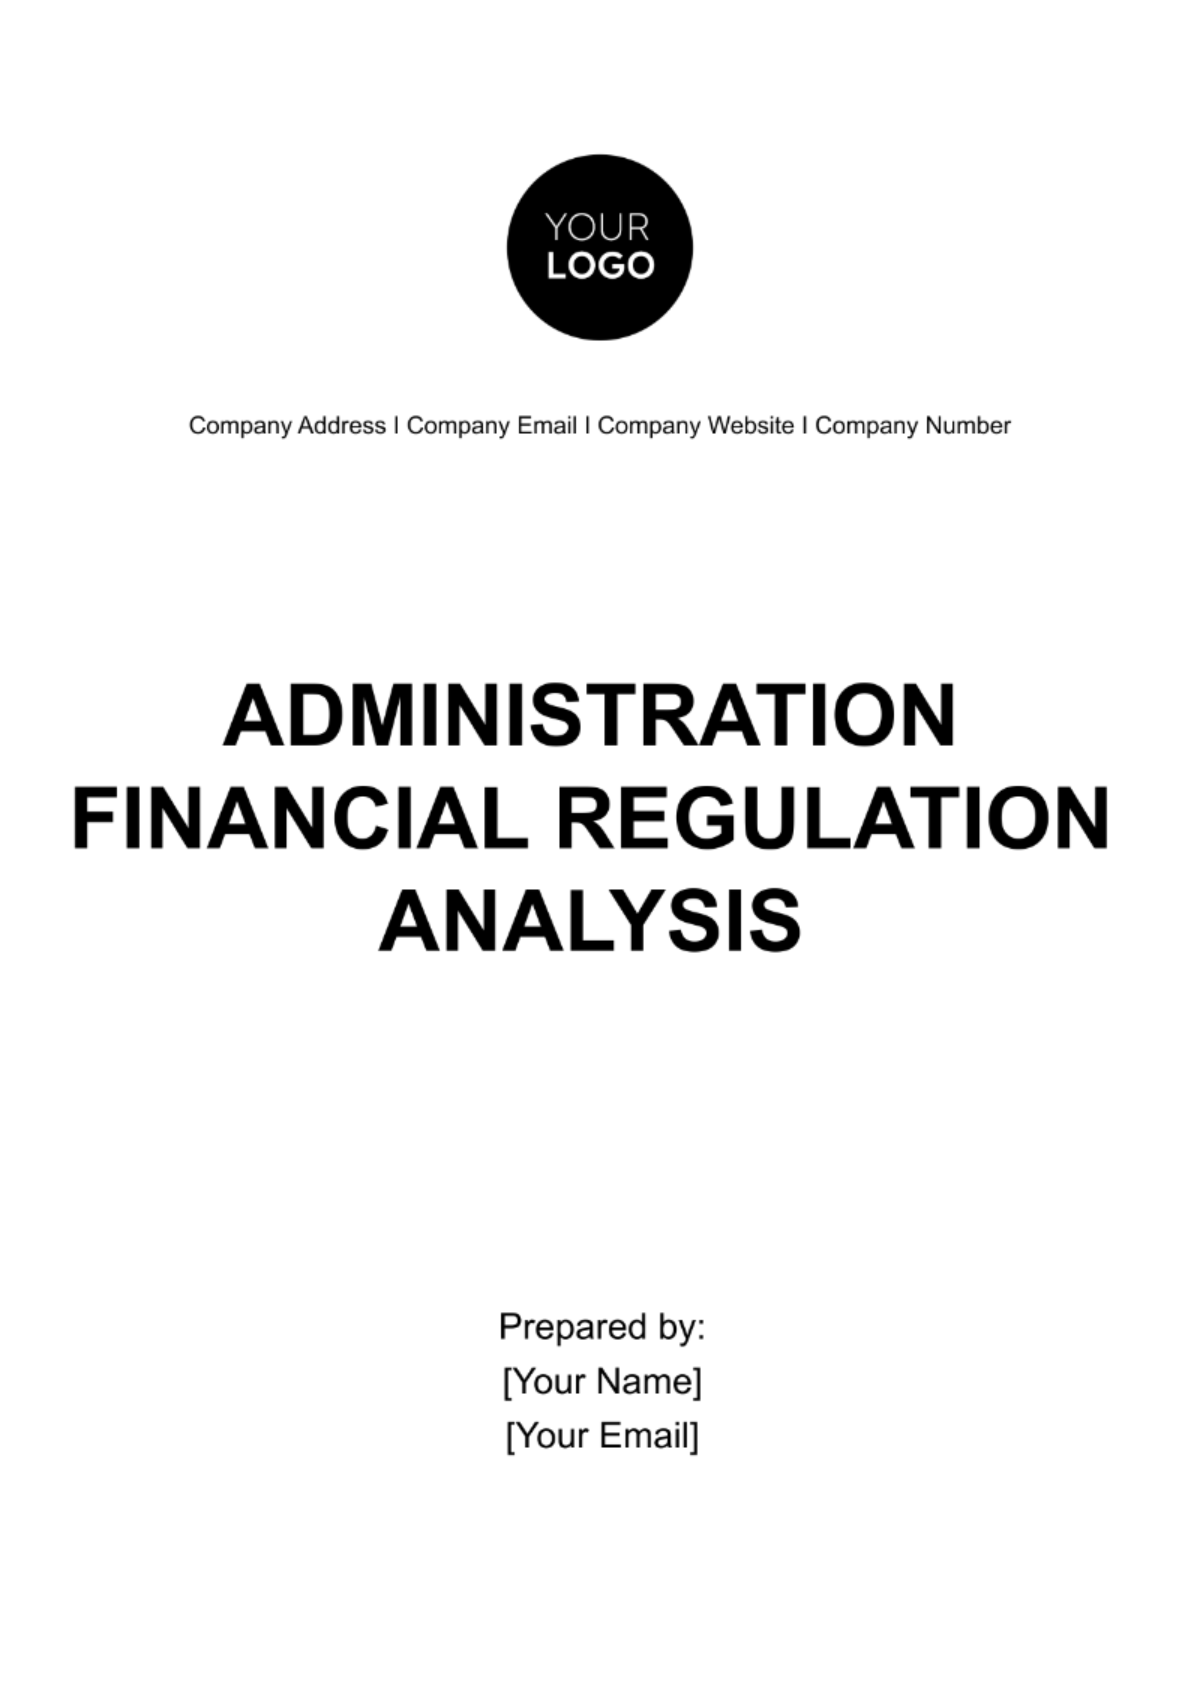 Administration Financial Regulation Analysis Template